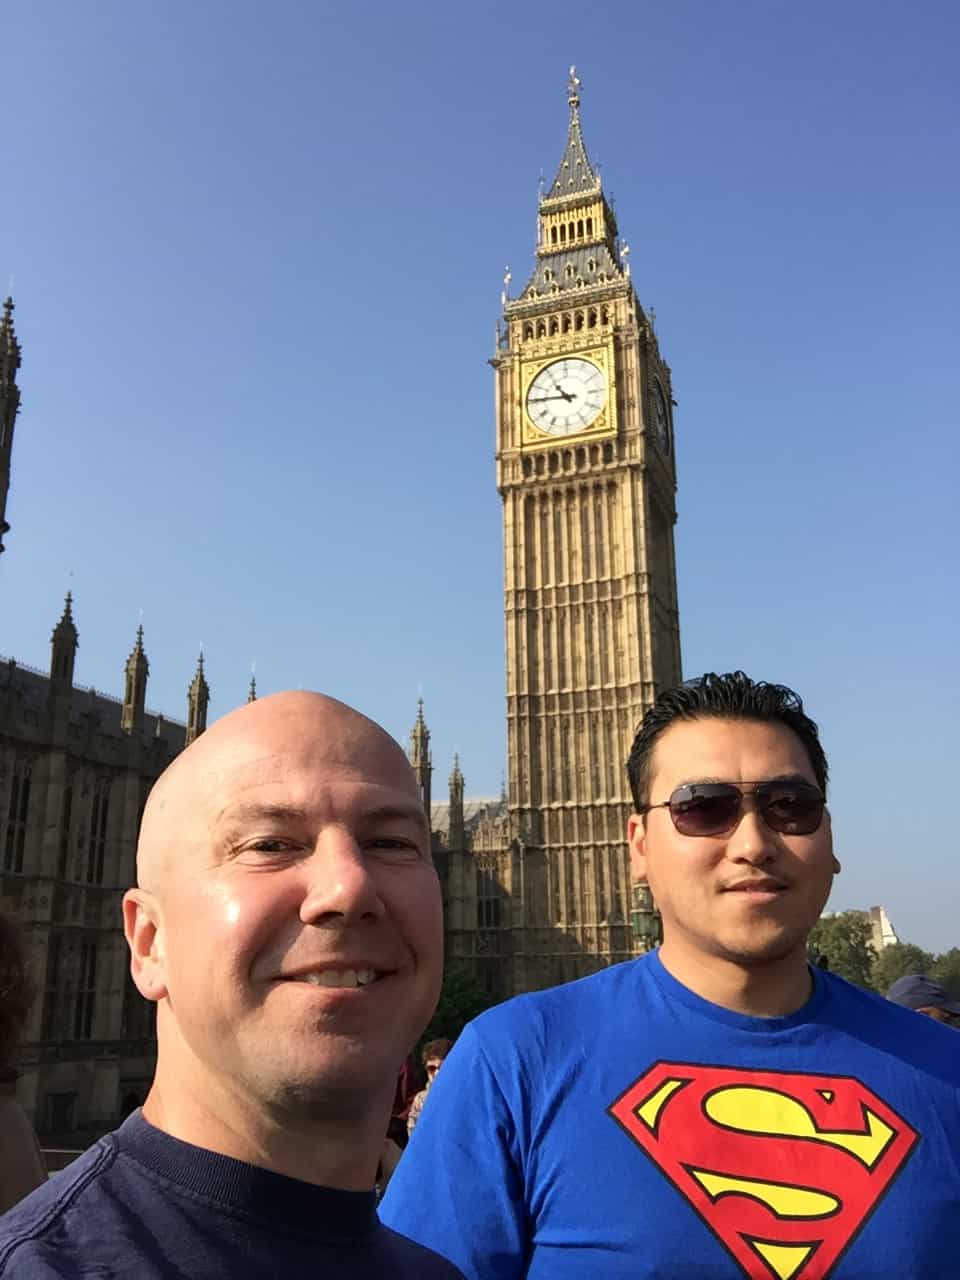 Big Ben London England with David Lee